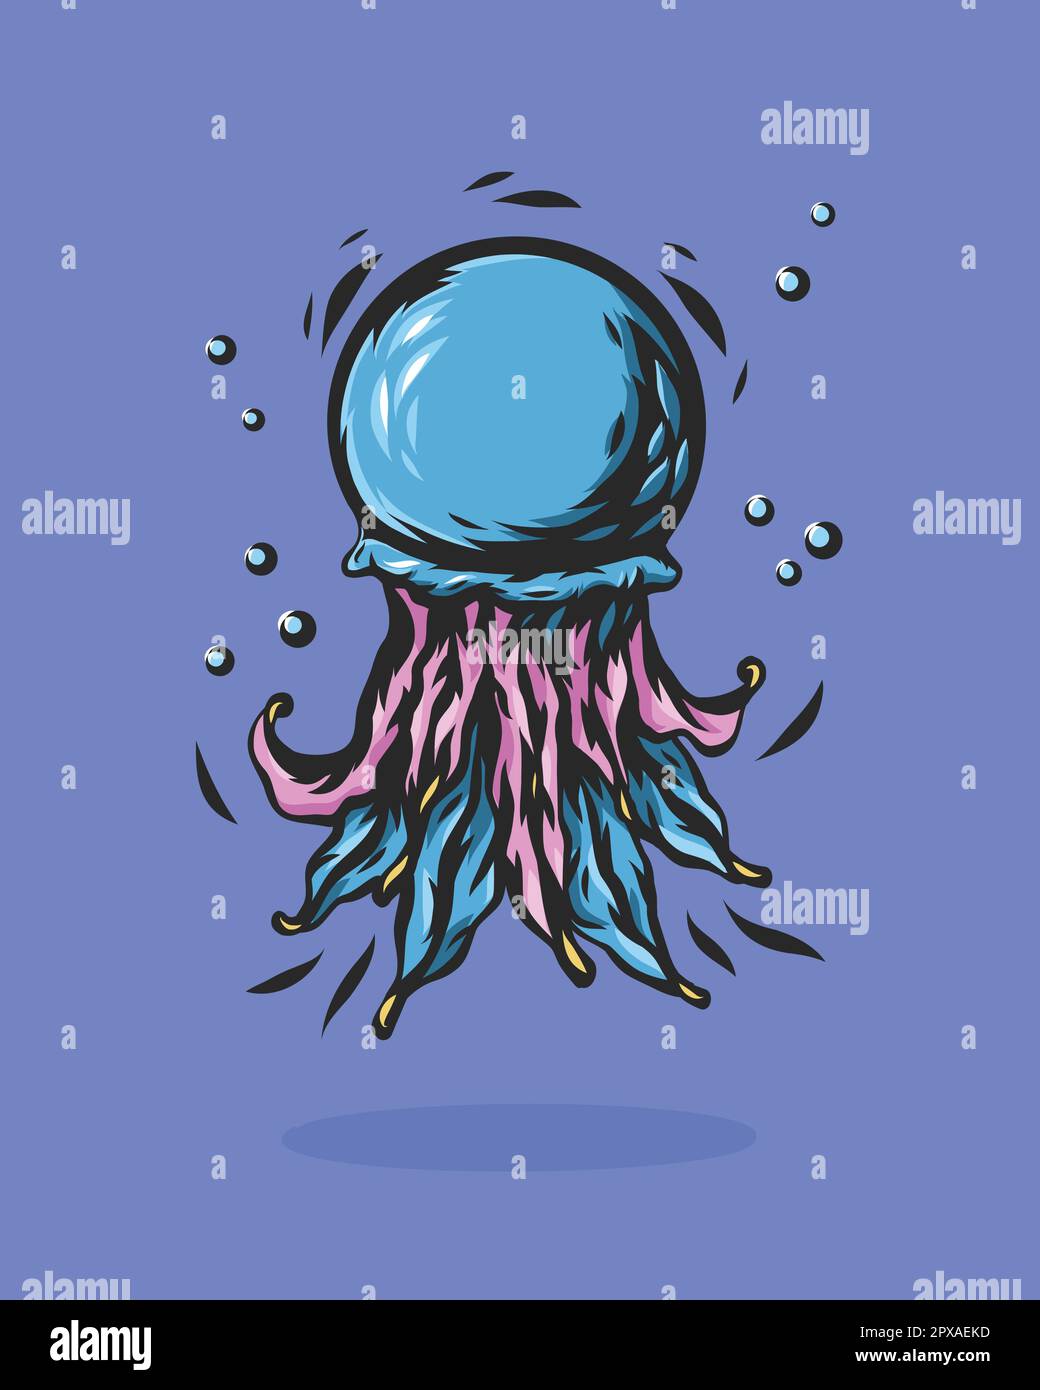 Farbenfrohe Quallen-Illustration. Leuchtender Schwimmkarikatur medusa. Stock Vektor